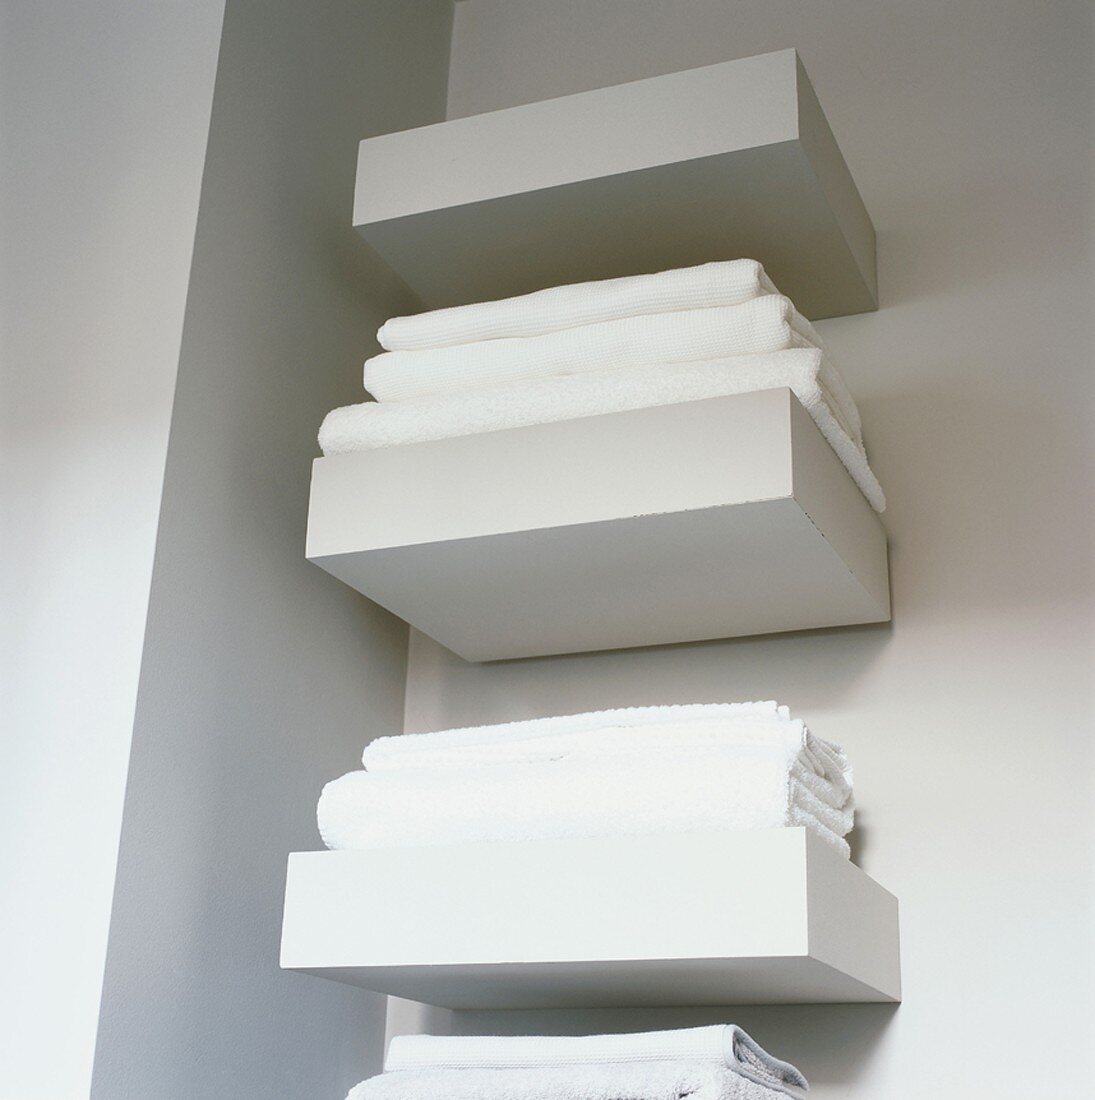 White bath towels on shelves